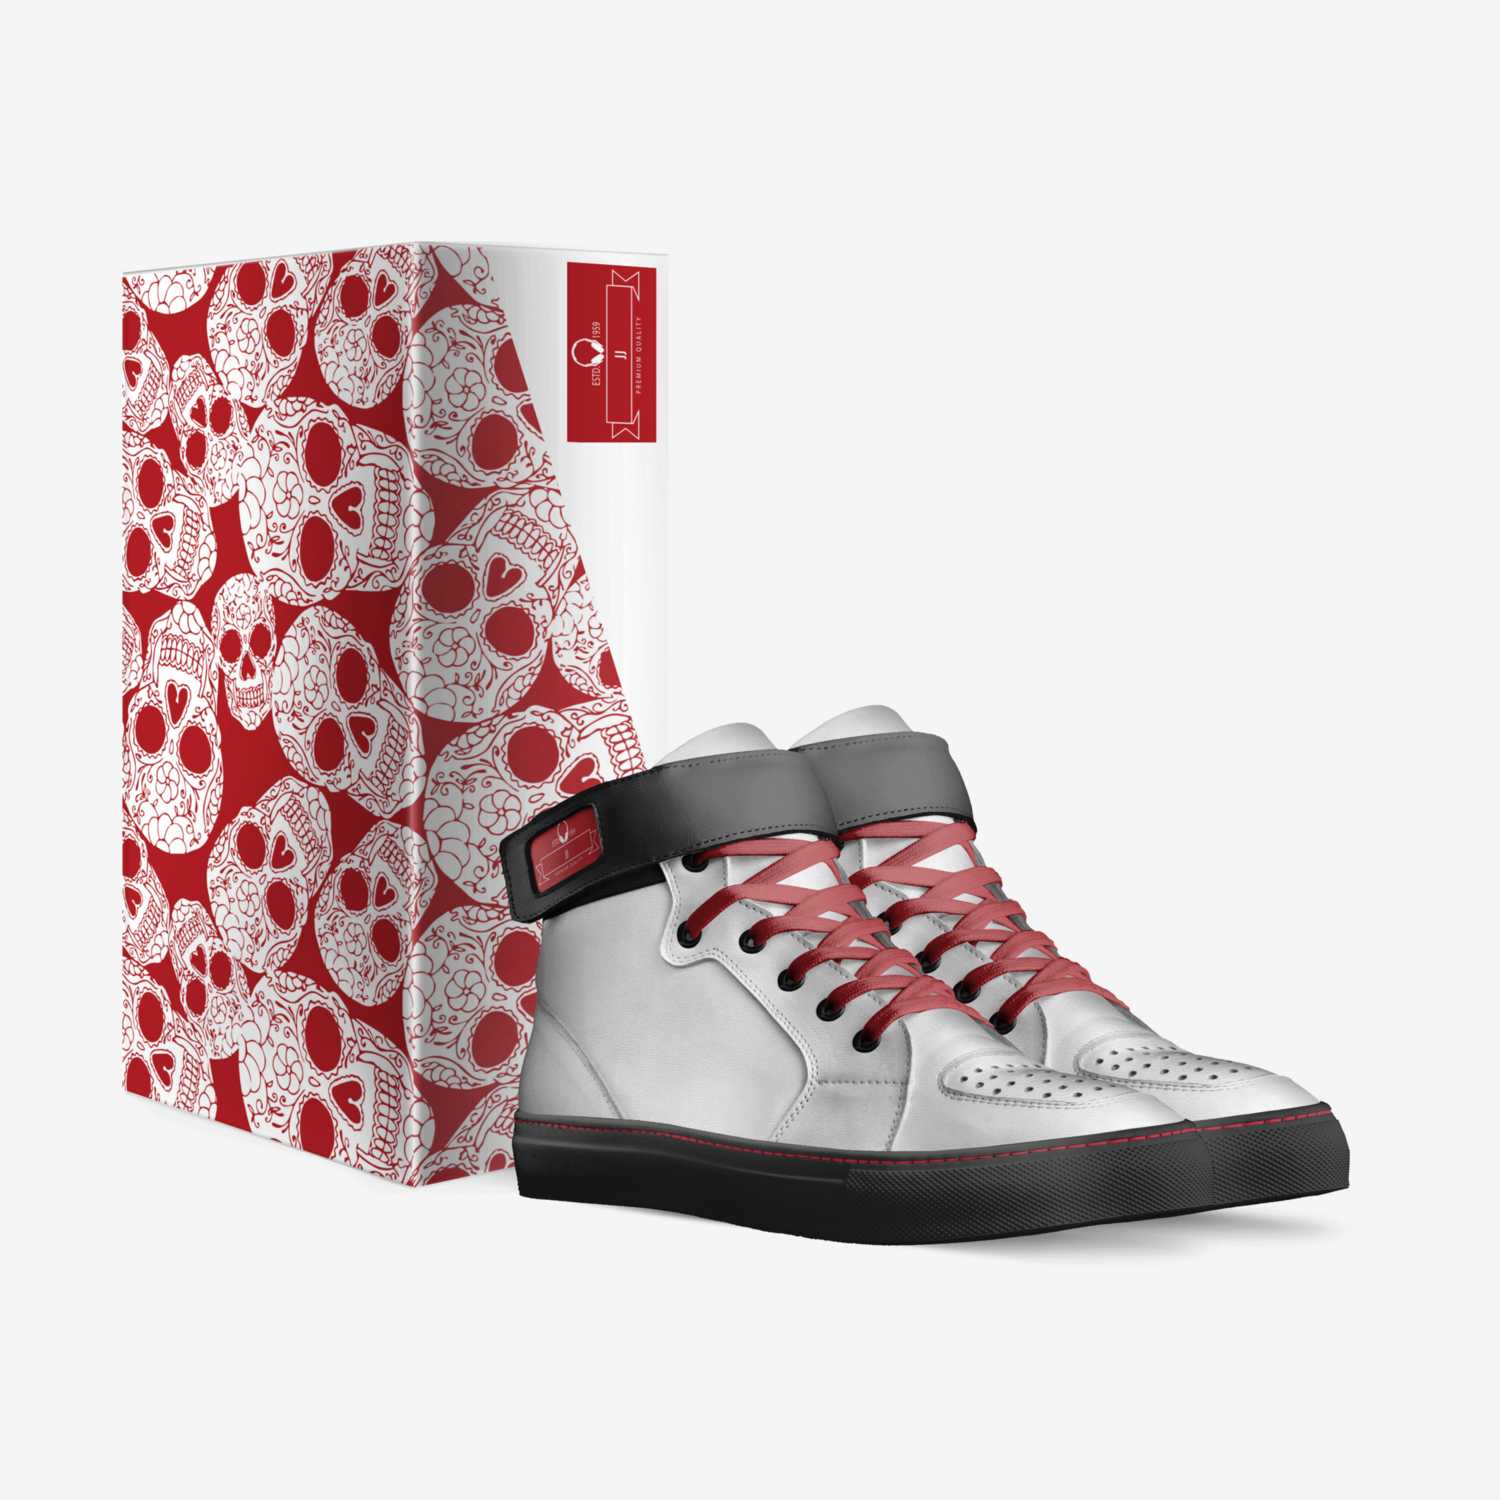 JJ custom made in Italy shoes by Gusanitho Guevara | Box view